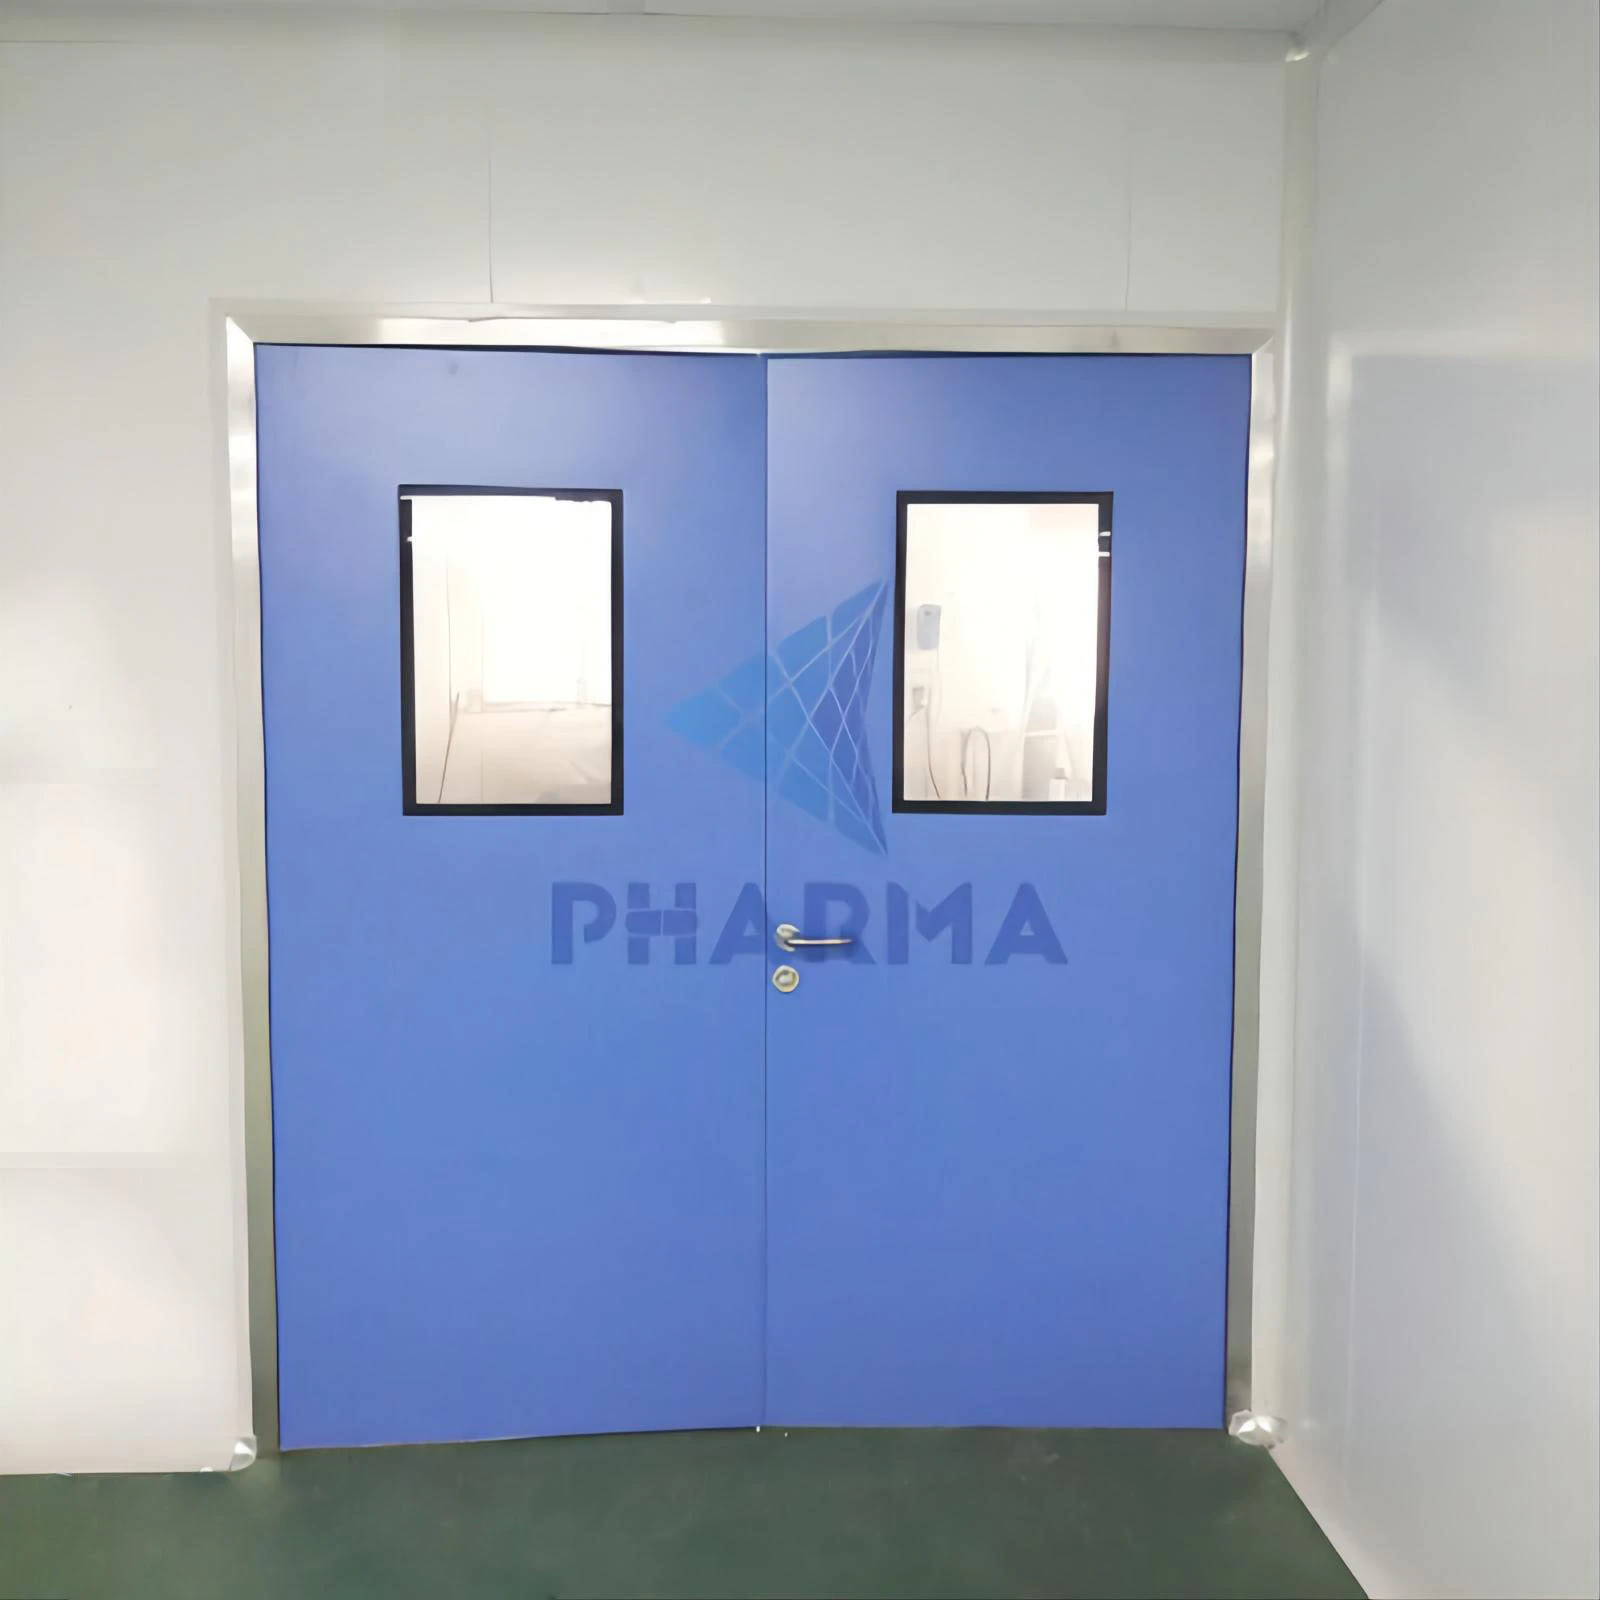 Aluminum Swing Doors For Hospital, Lab, Pharmaceutical, Dust-Proof Clean Room Door Medical Clean Room Swing Door